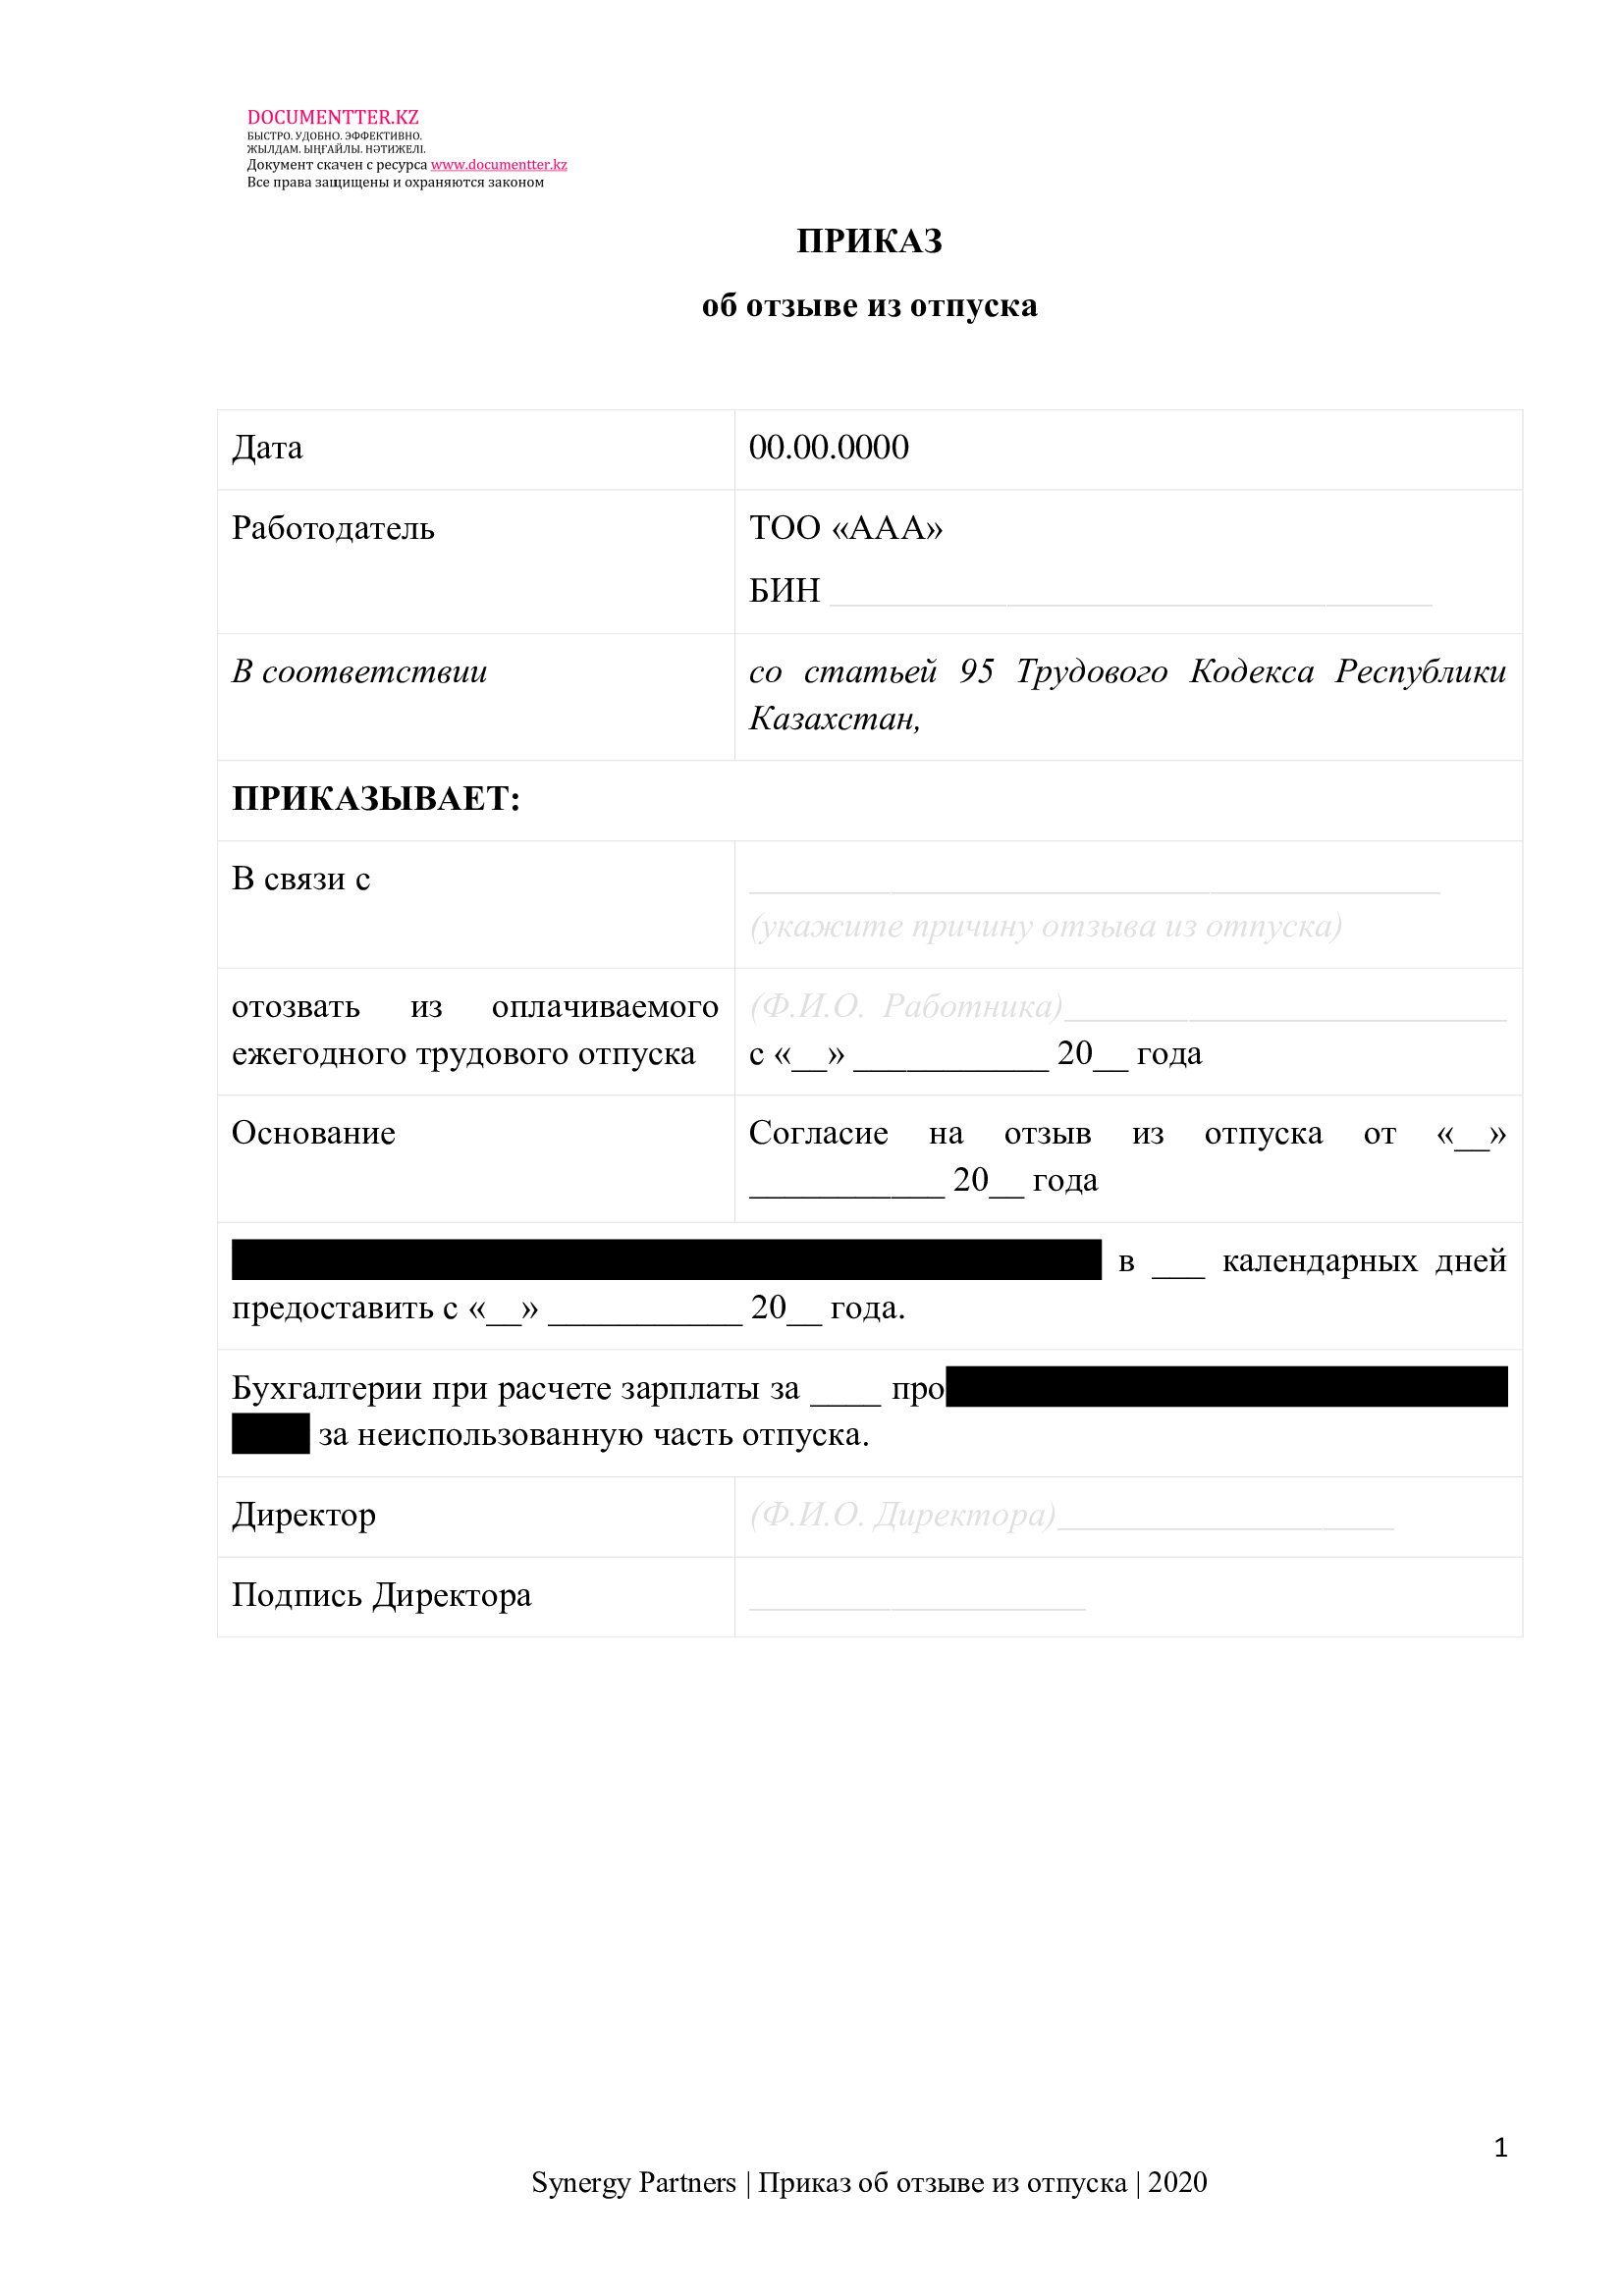 Приказ об отзыва работника из отпуска | documentterkz.com в Казахстане